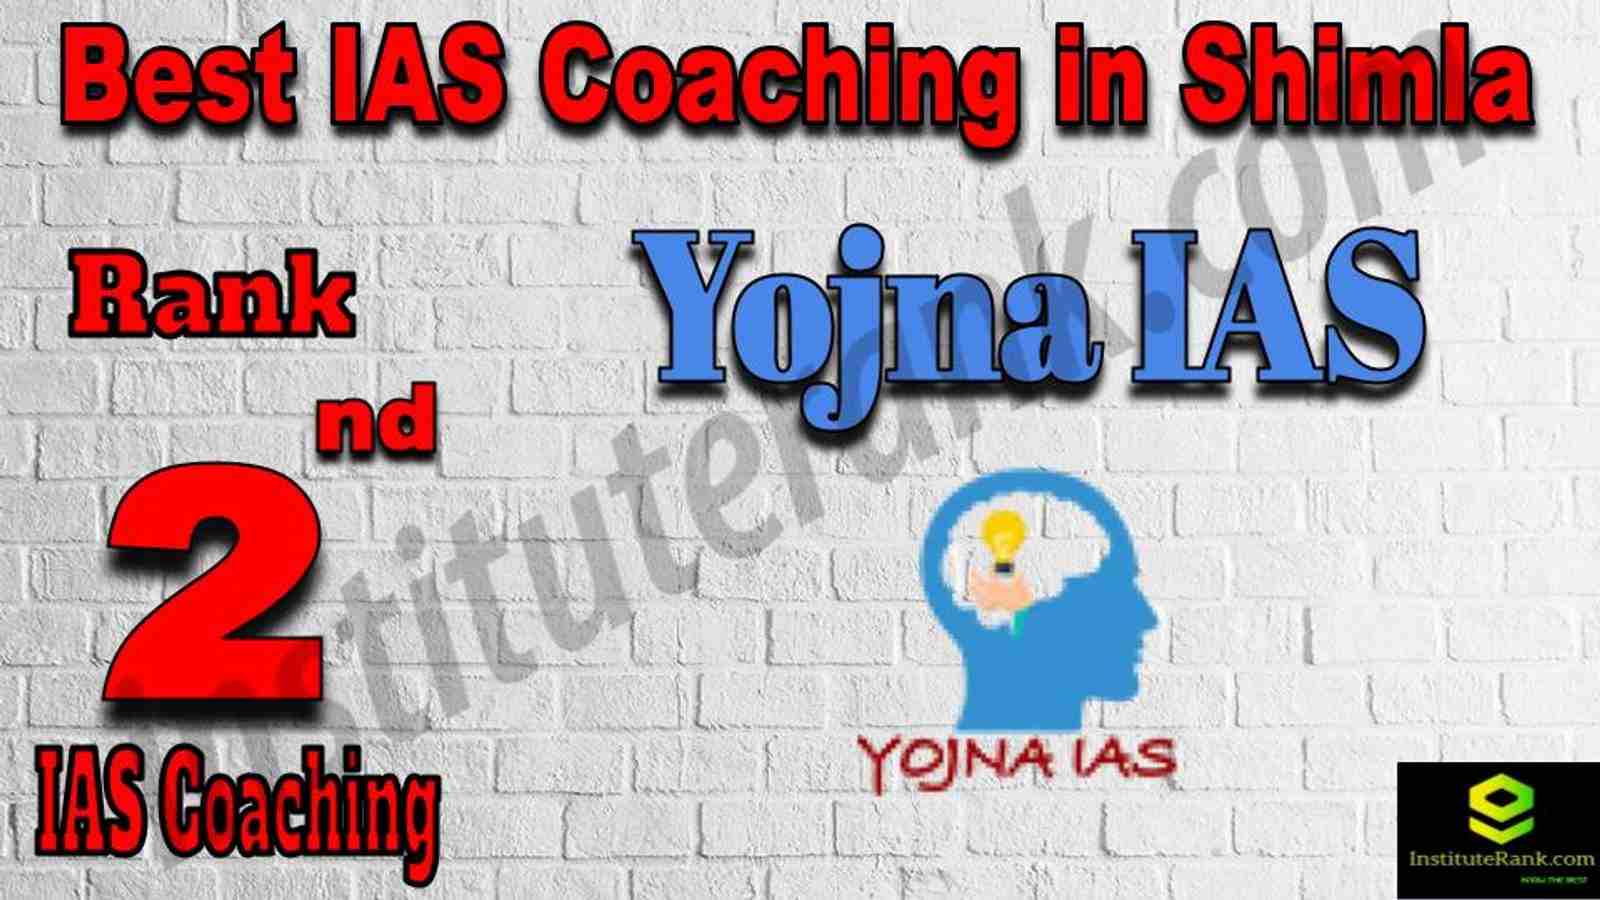 2nd Best IAS Coaching in Shimla